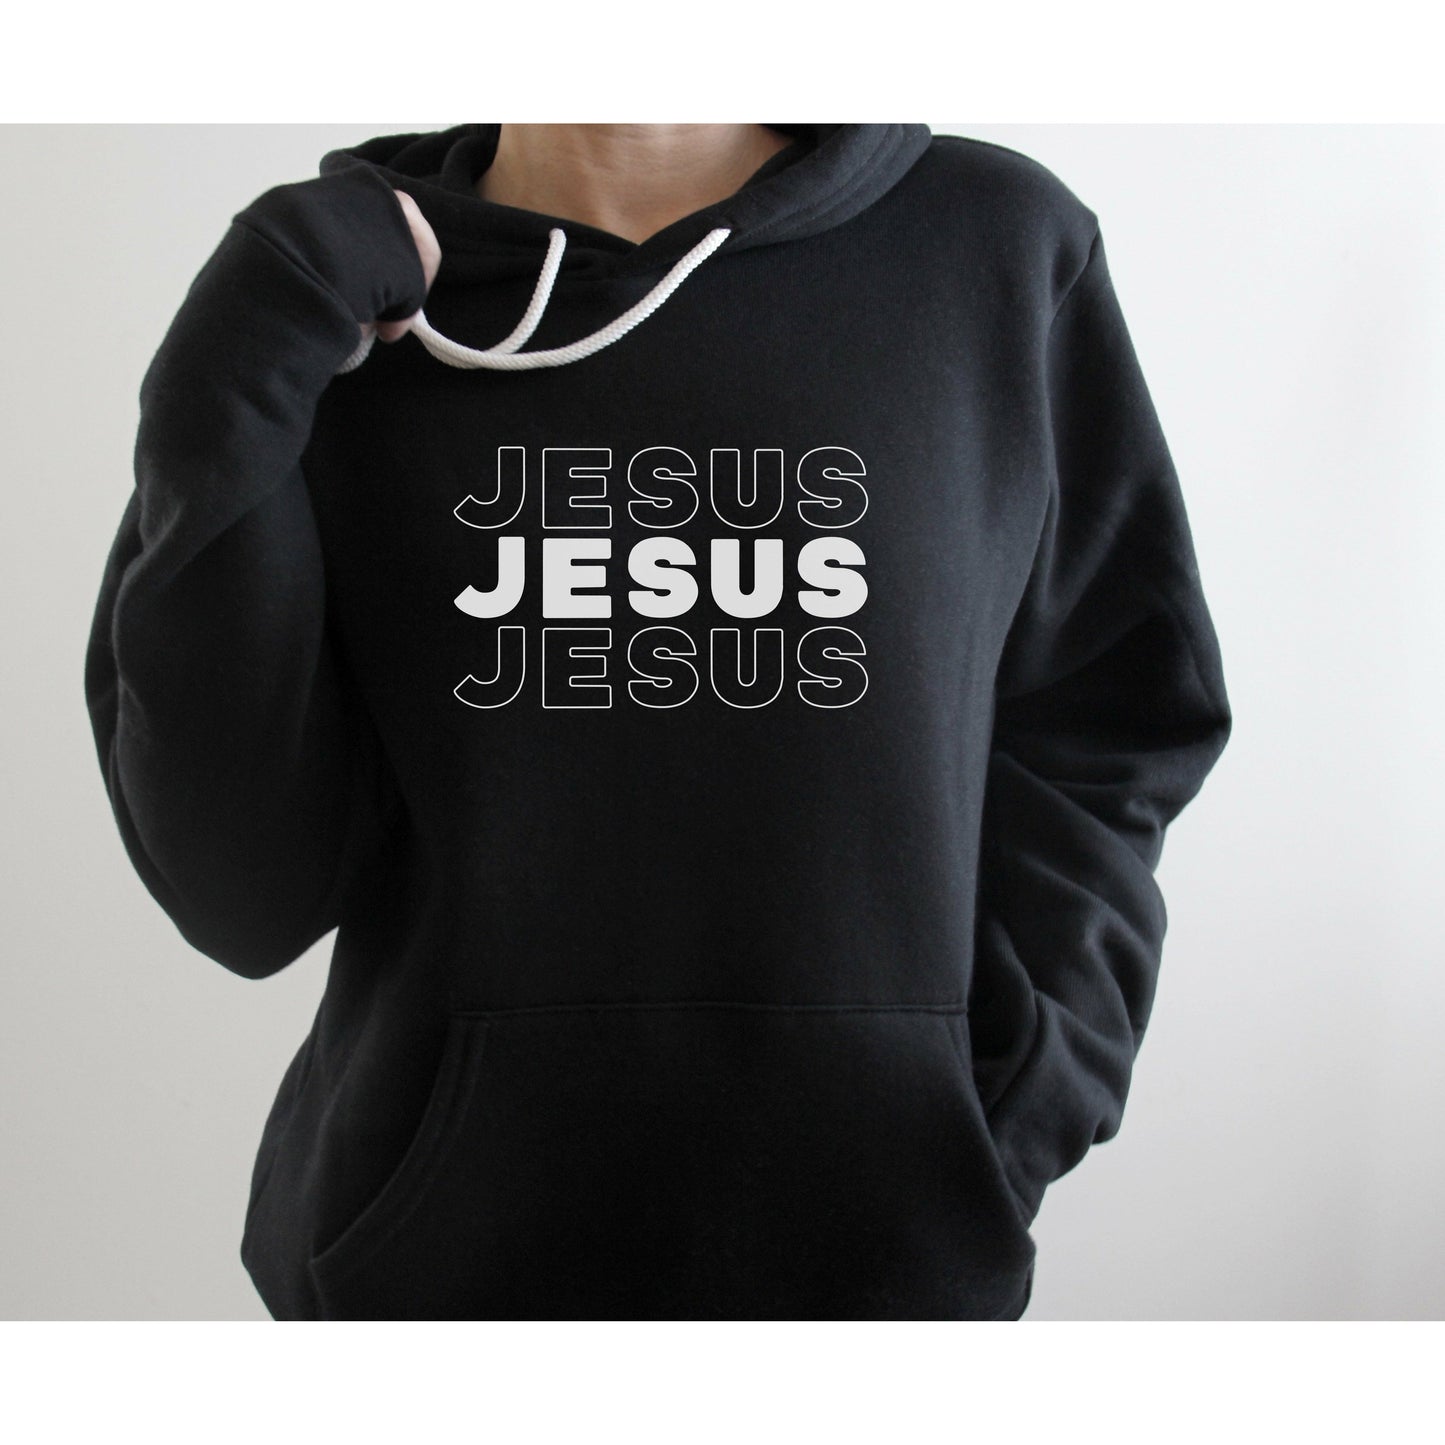 Jesus, Jesus, Jesus (White text) | Premium Sponge Fleece Pullover Hoodie